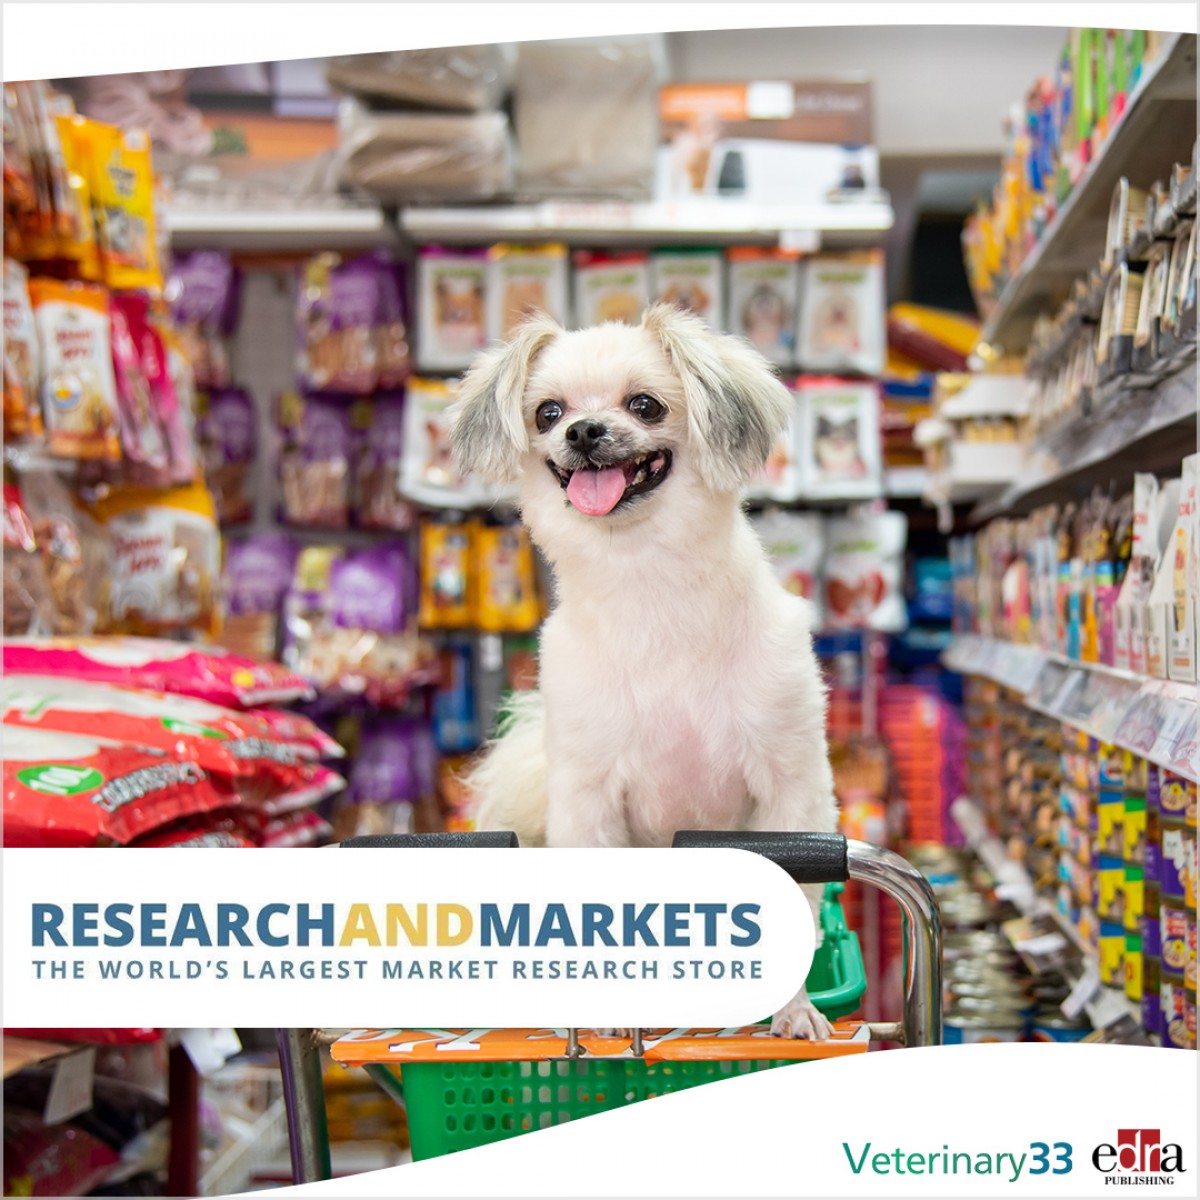 Animal health market to surpass $57B | Veterinary 33